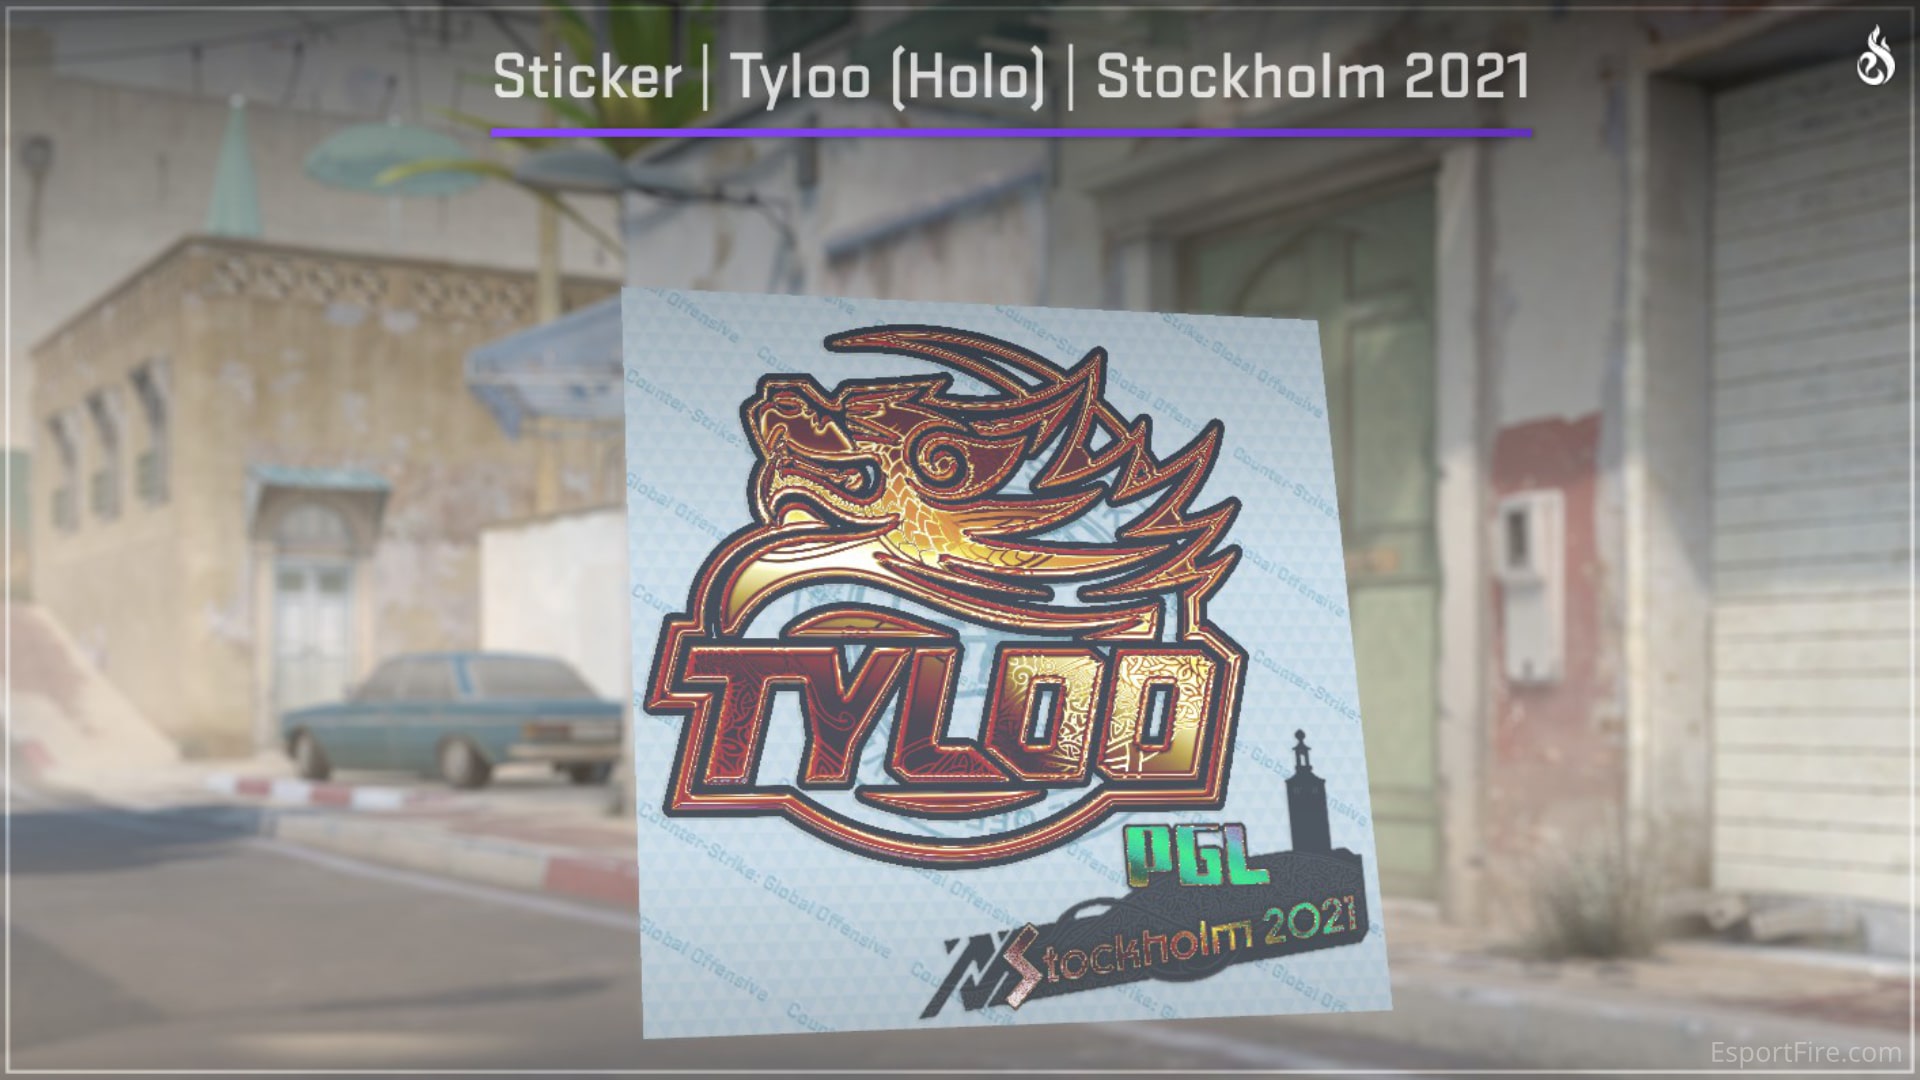 Tyloo Stockholm 2021 - Best Orange Stickers for Crafts